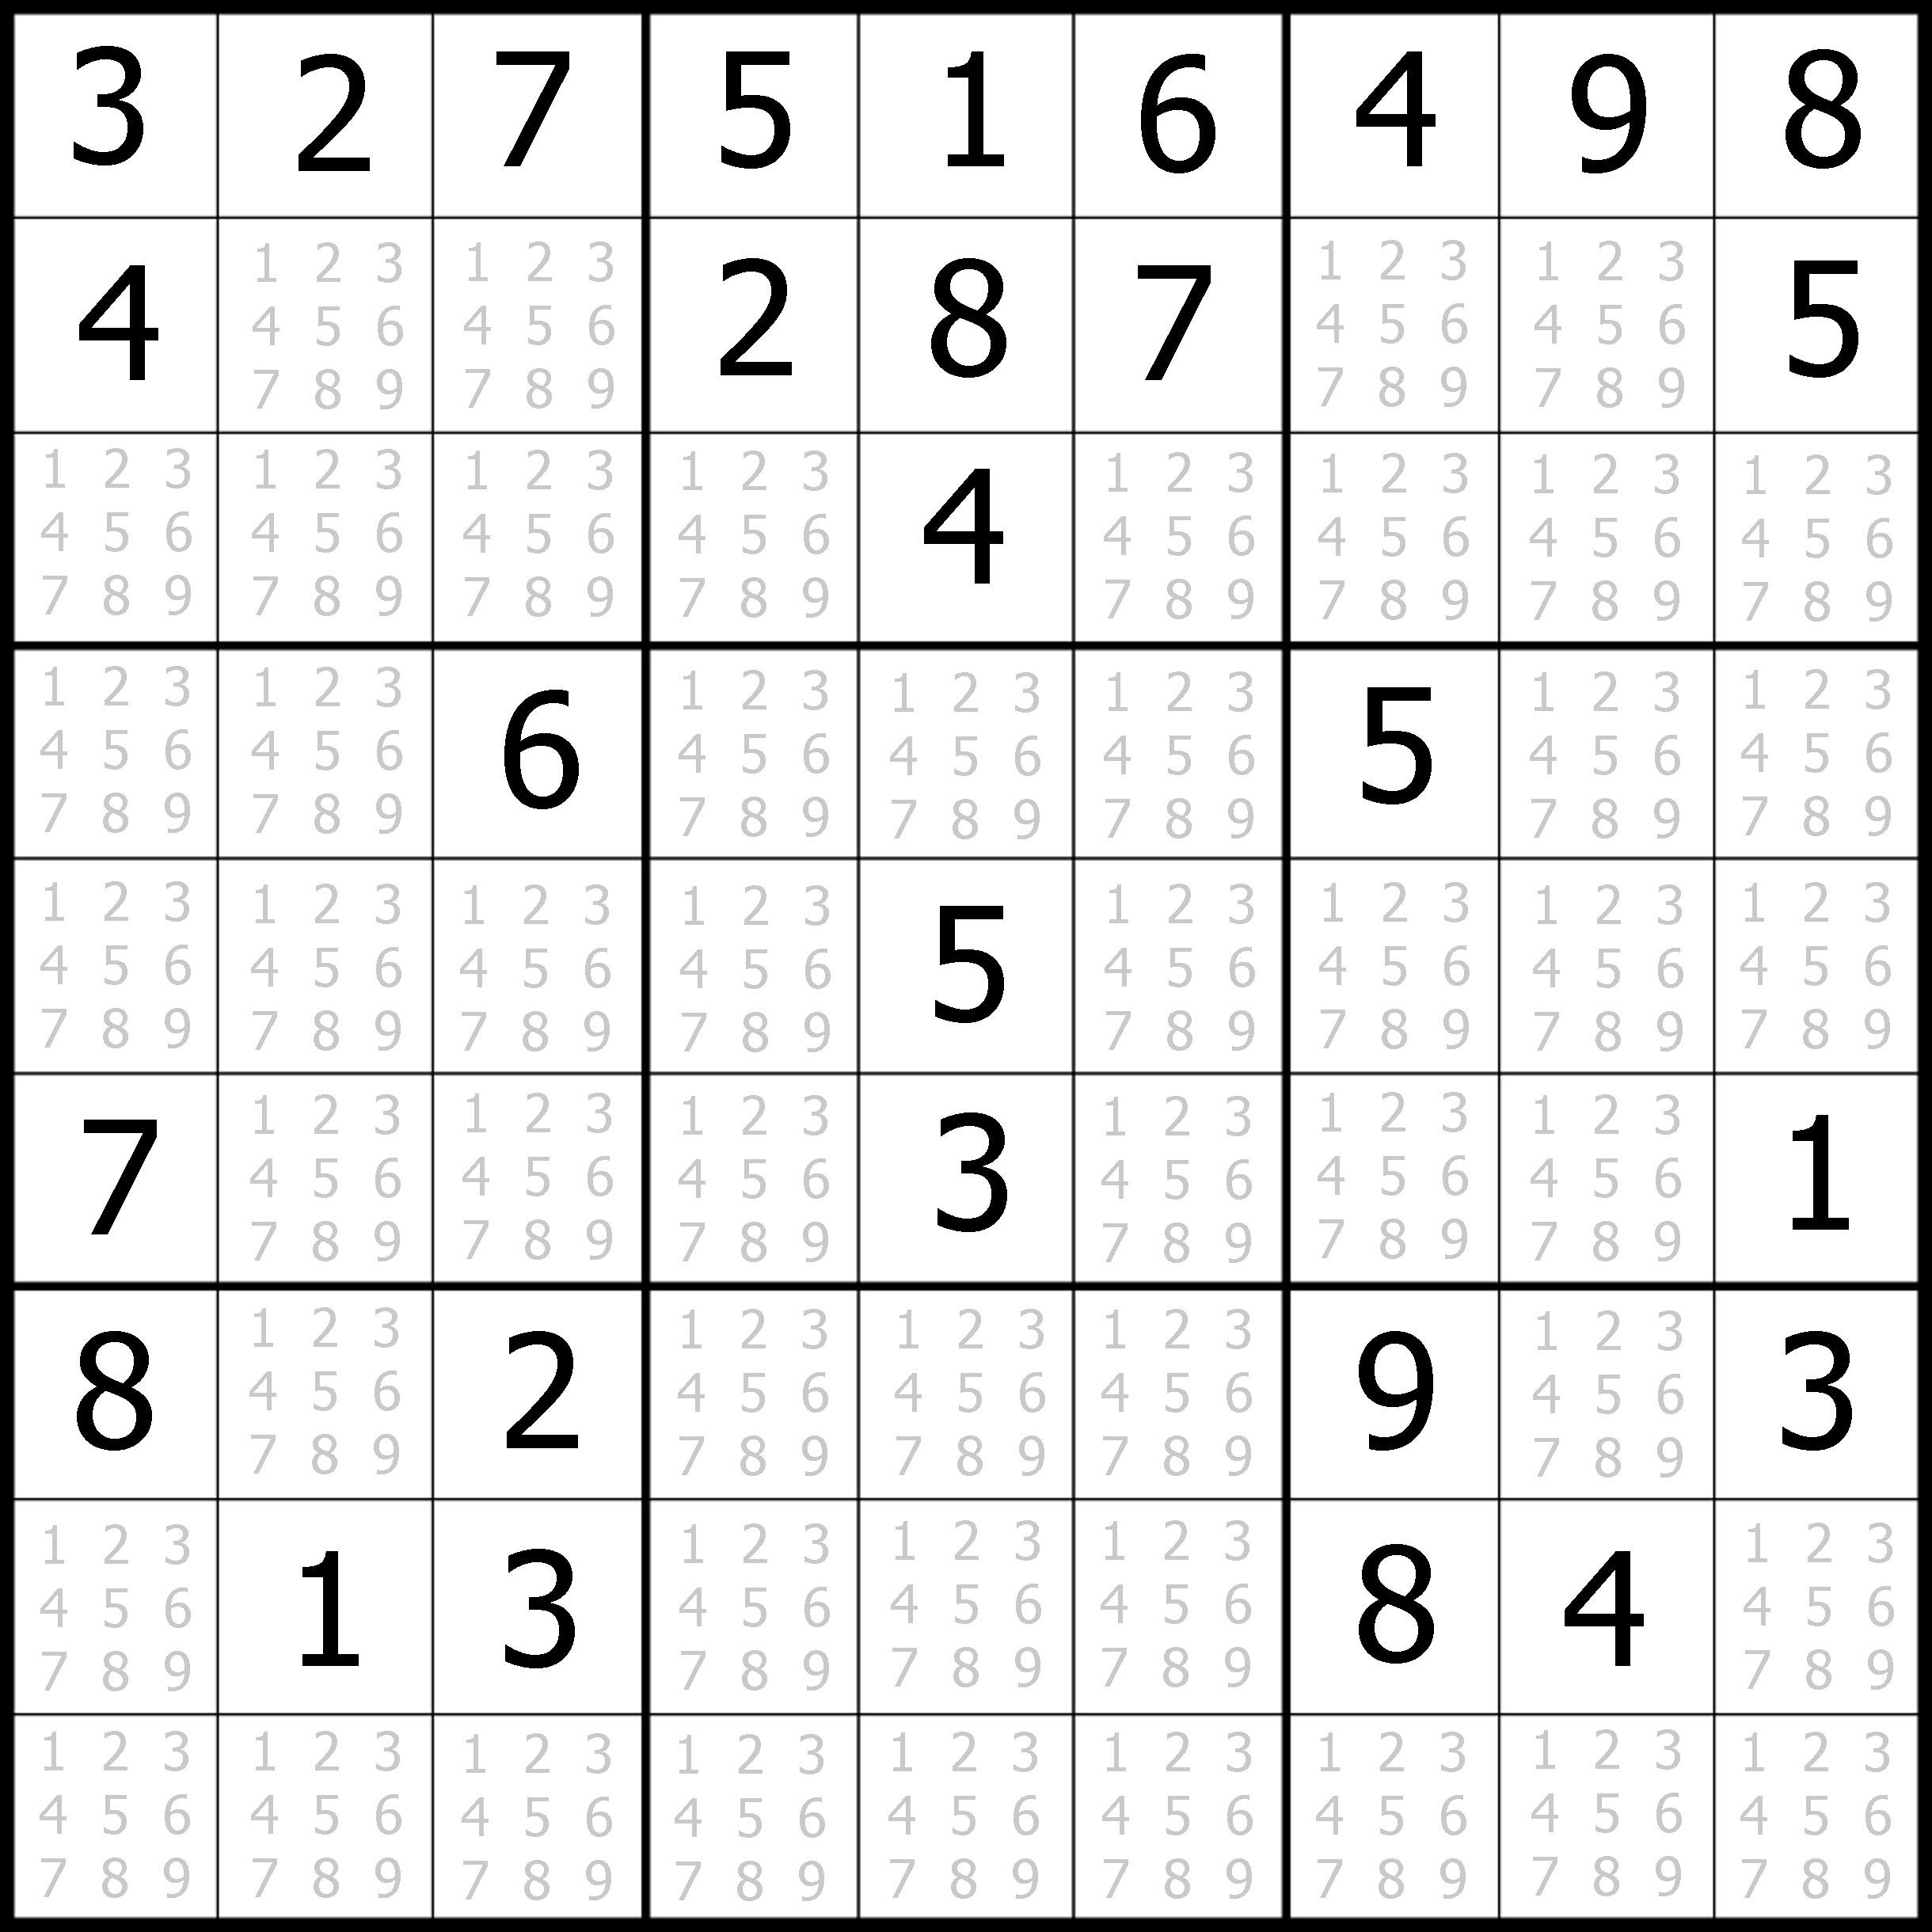 Free Sudoku Puzzles Online Printable